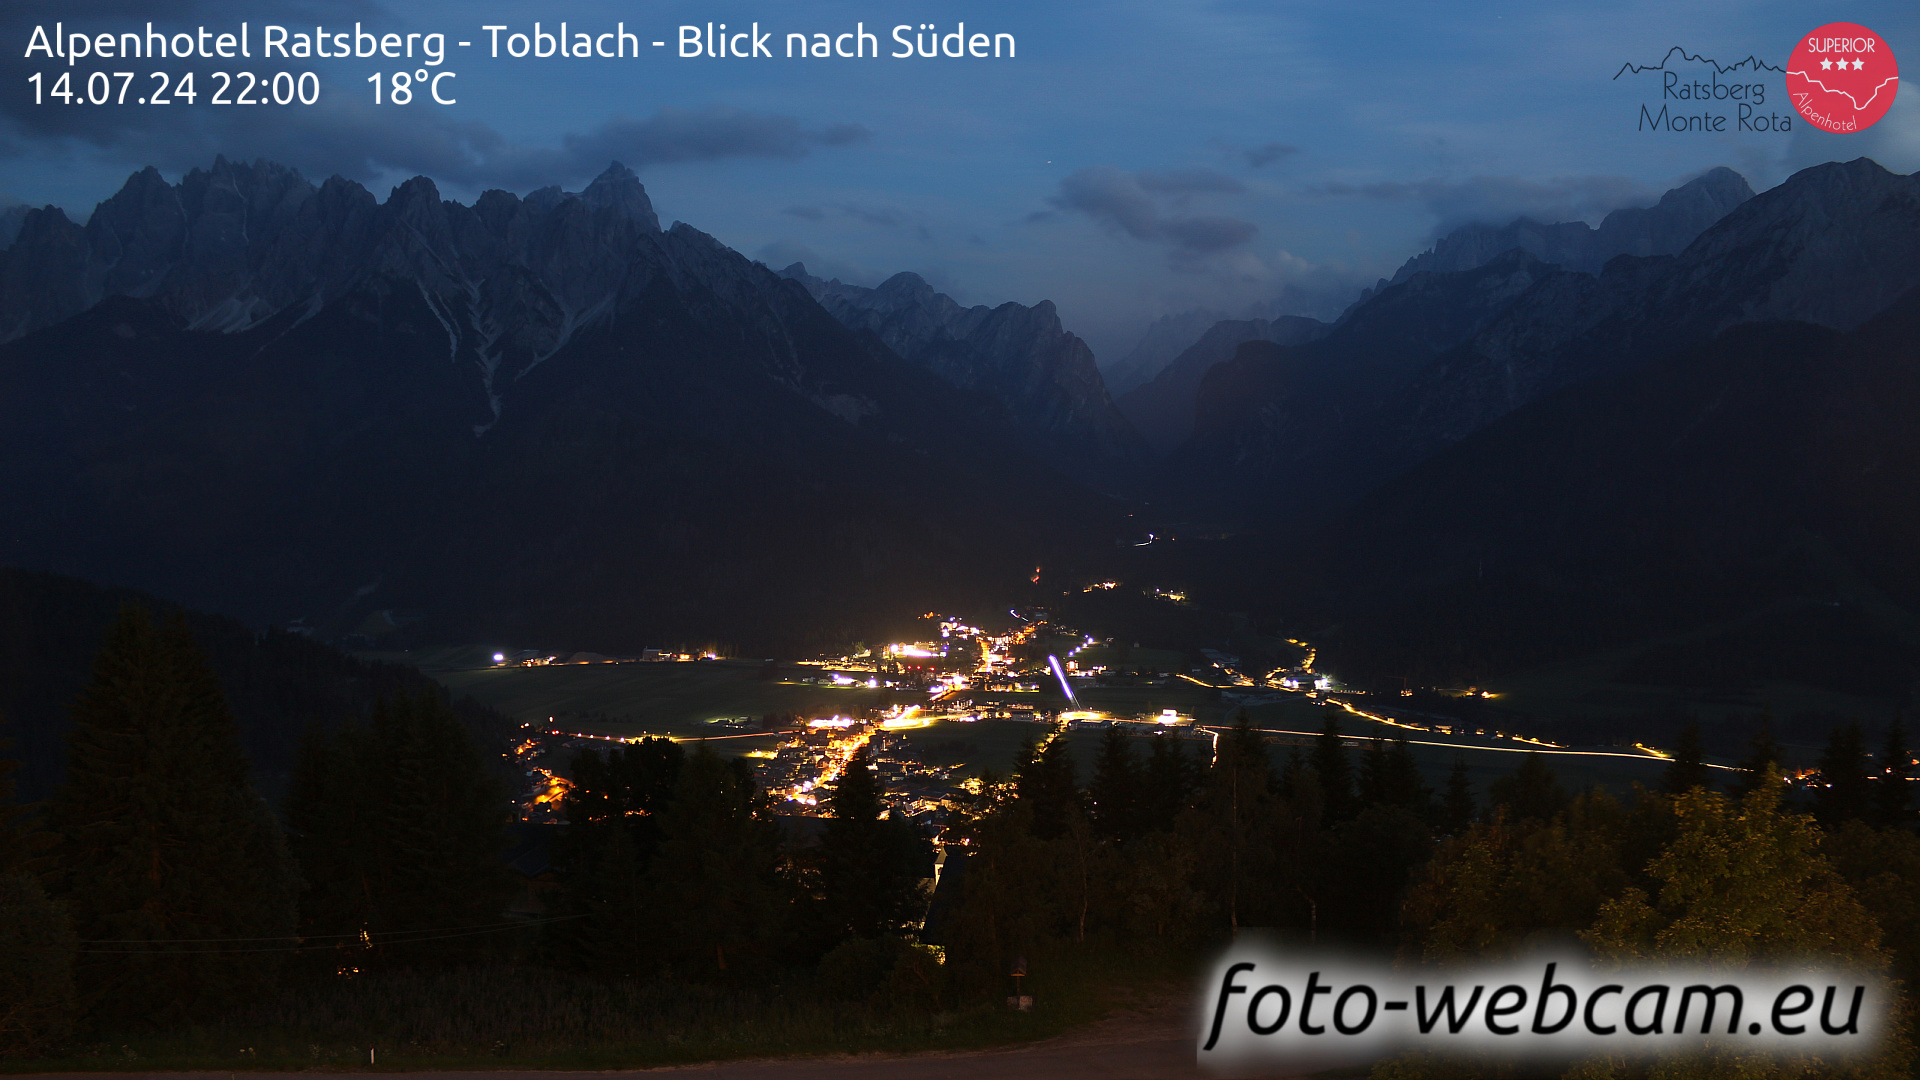 Toblach (Dolomites) Wed. 22:03